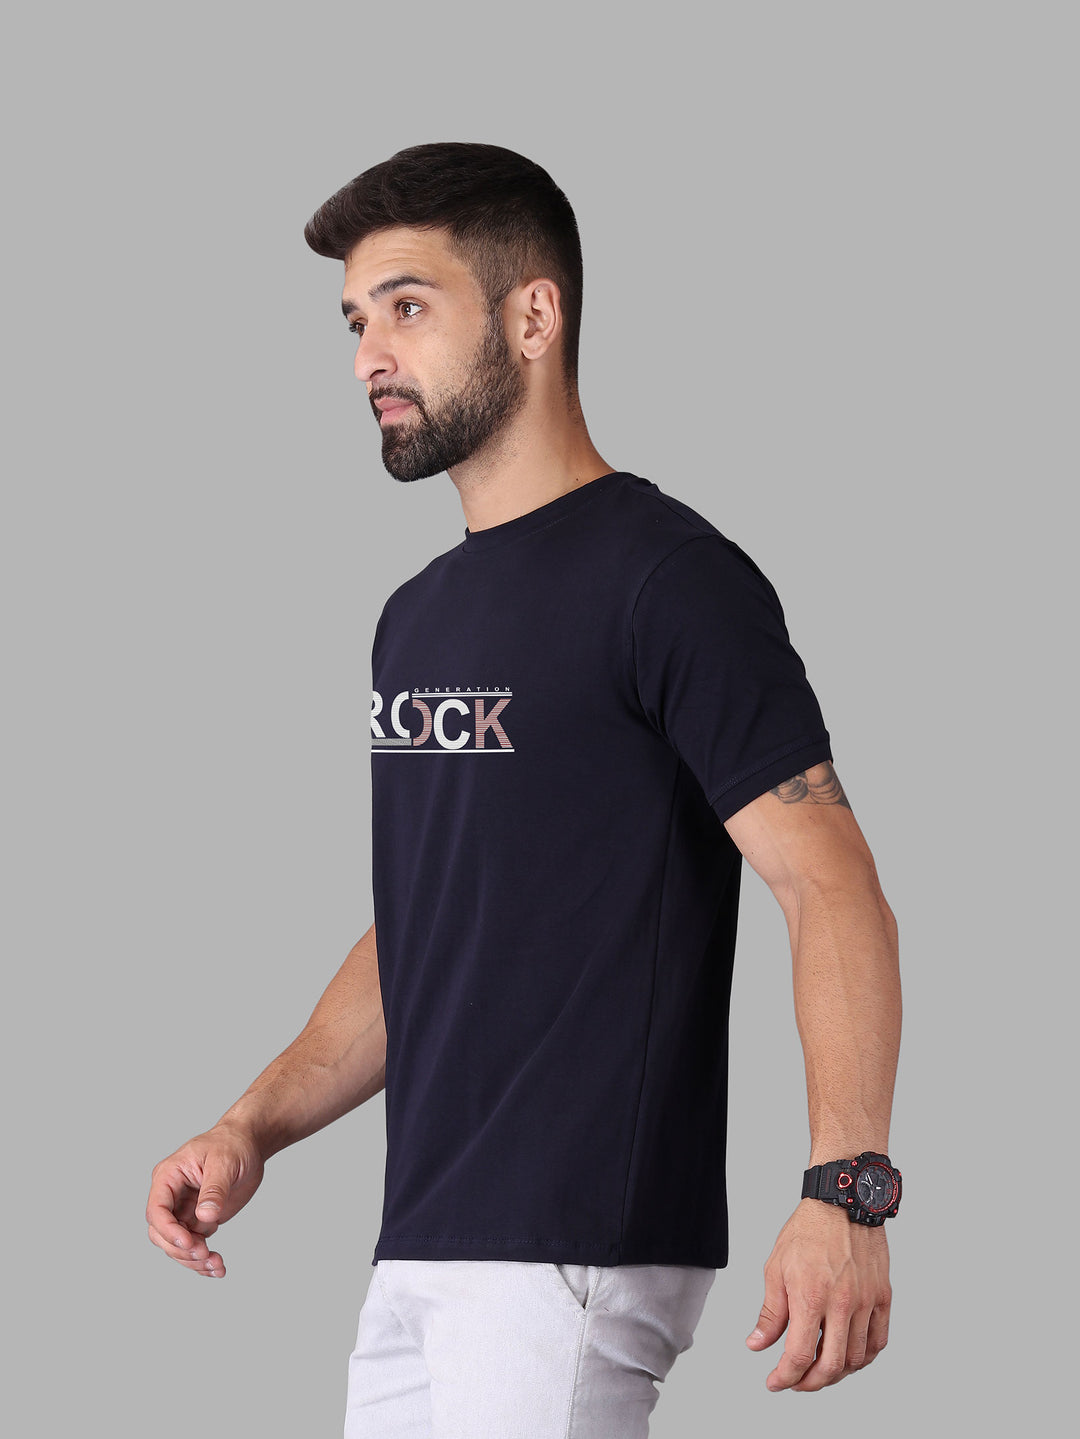 Rock Generation Crew Neck T-Shirt